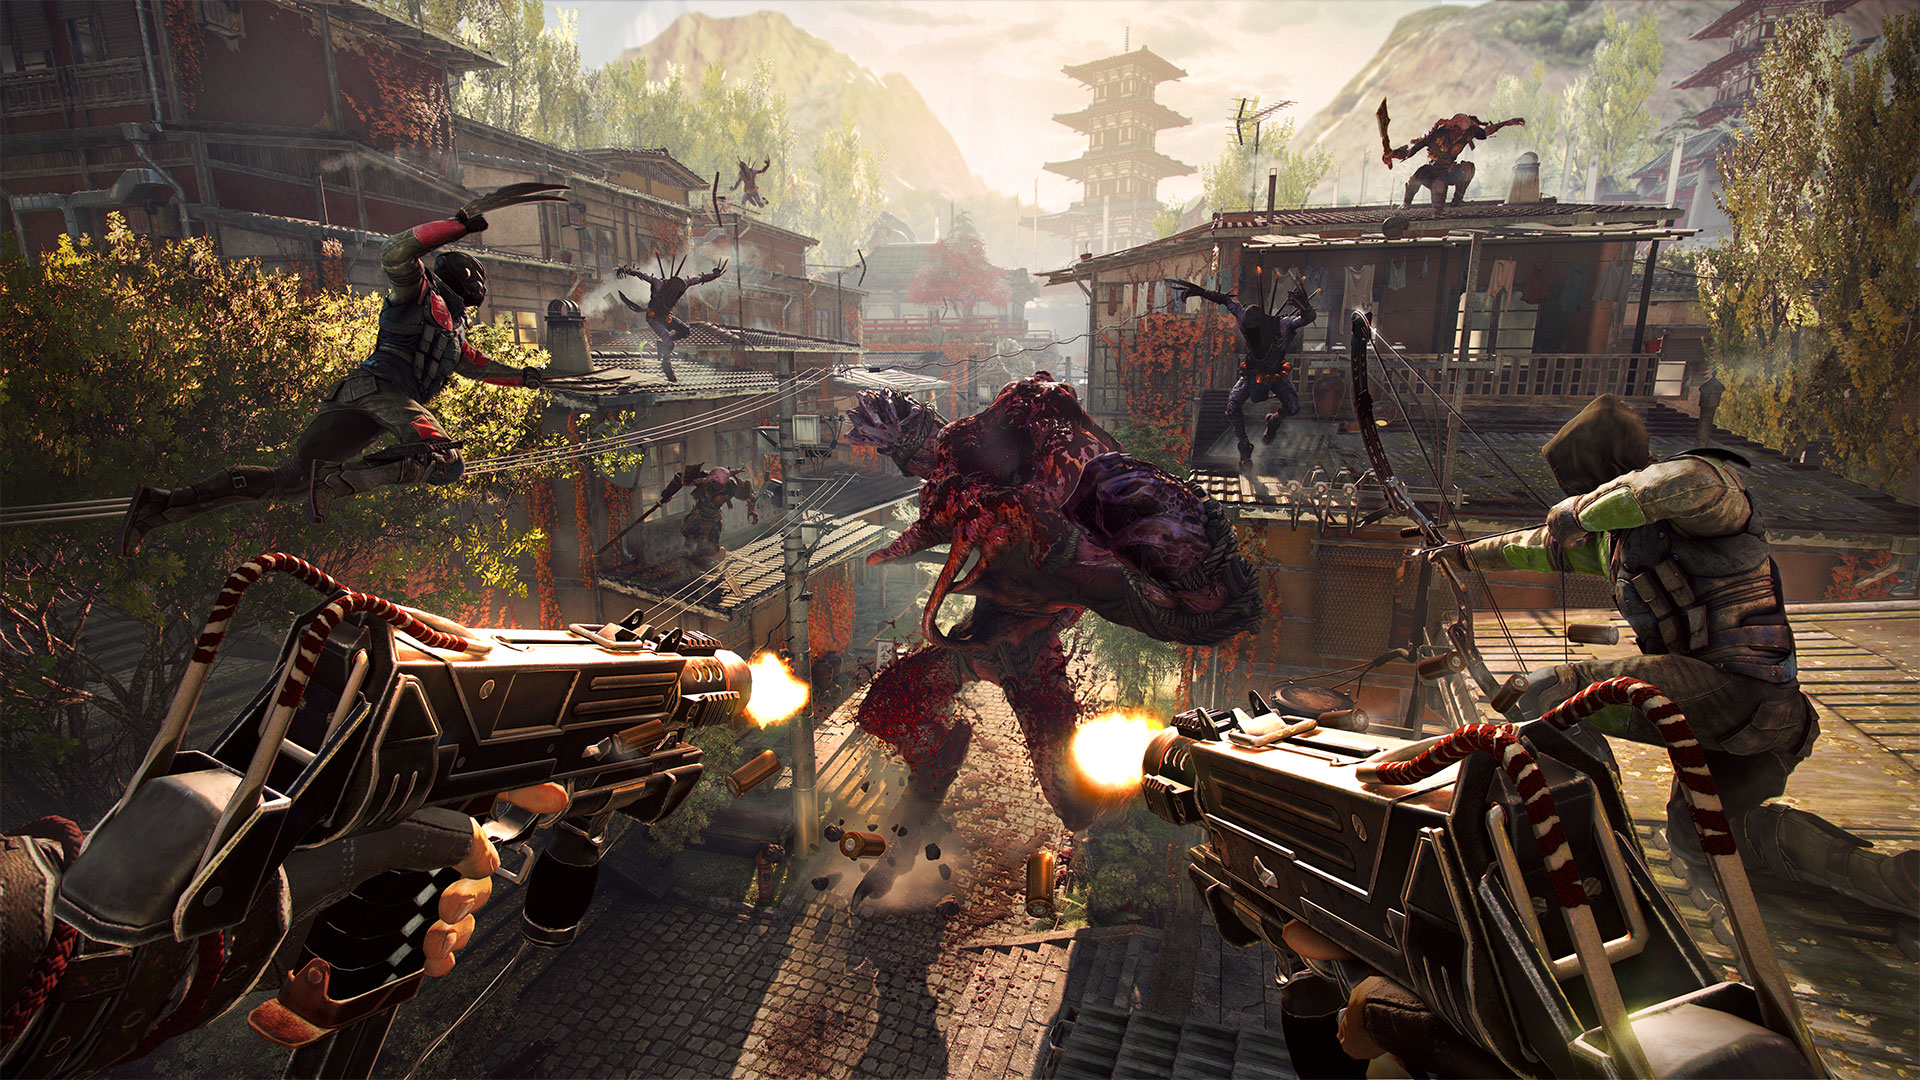 Unreal Engine's tech unleashed Shadow Warrior 3's devs